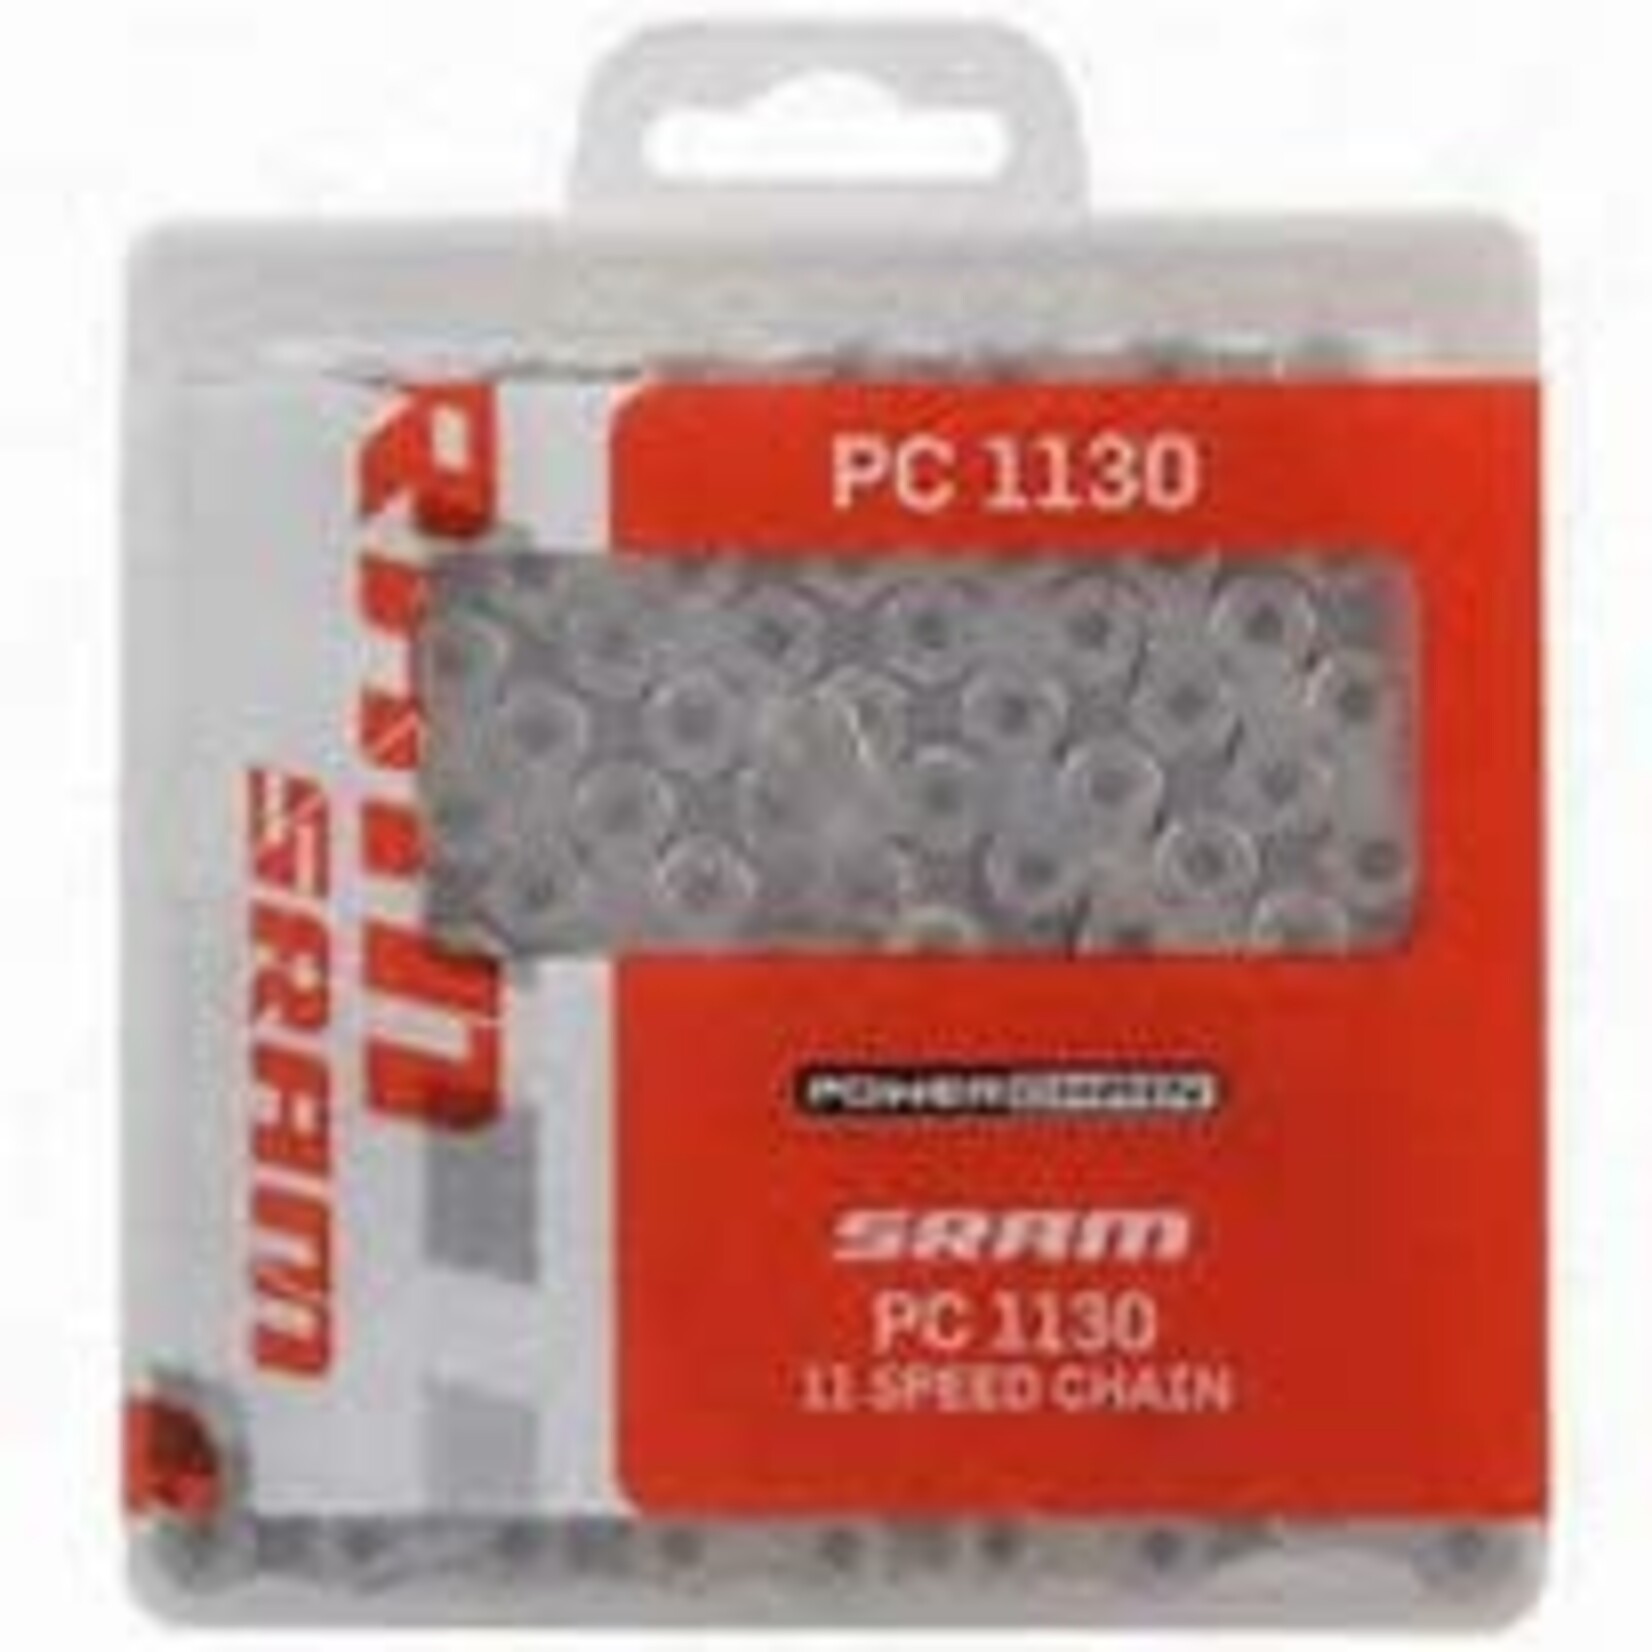 SRAM SRAM - PC-1130 Chain - 11-Speed, 120 Links, Silver/Gray